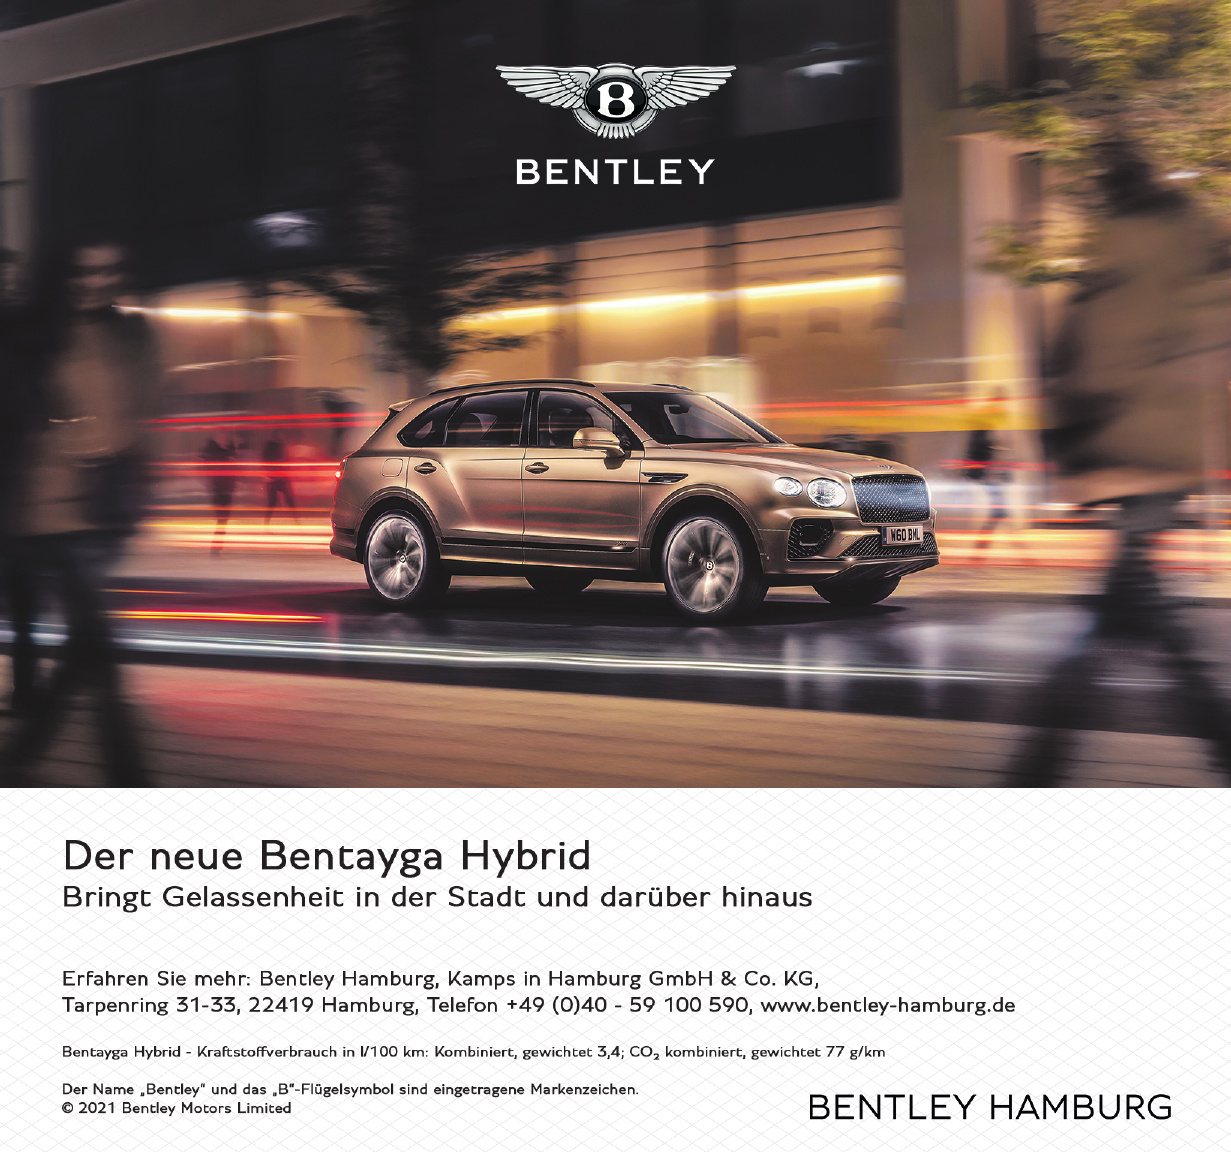 Bentley Hamburg, Kamps in Hamburg GmbH & Co. KG